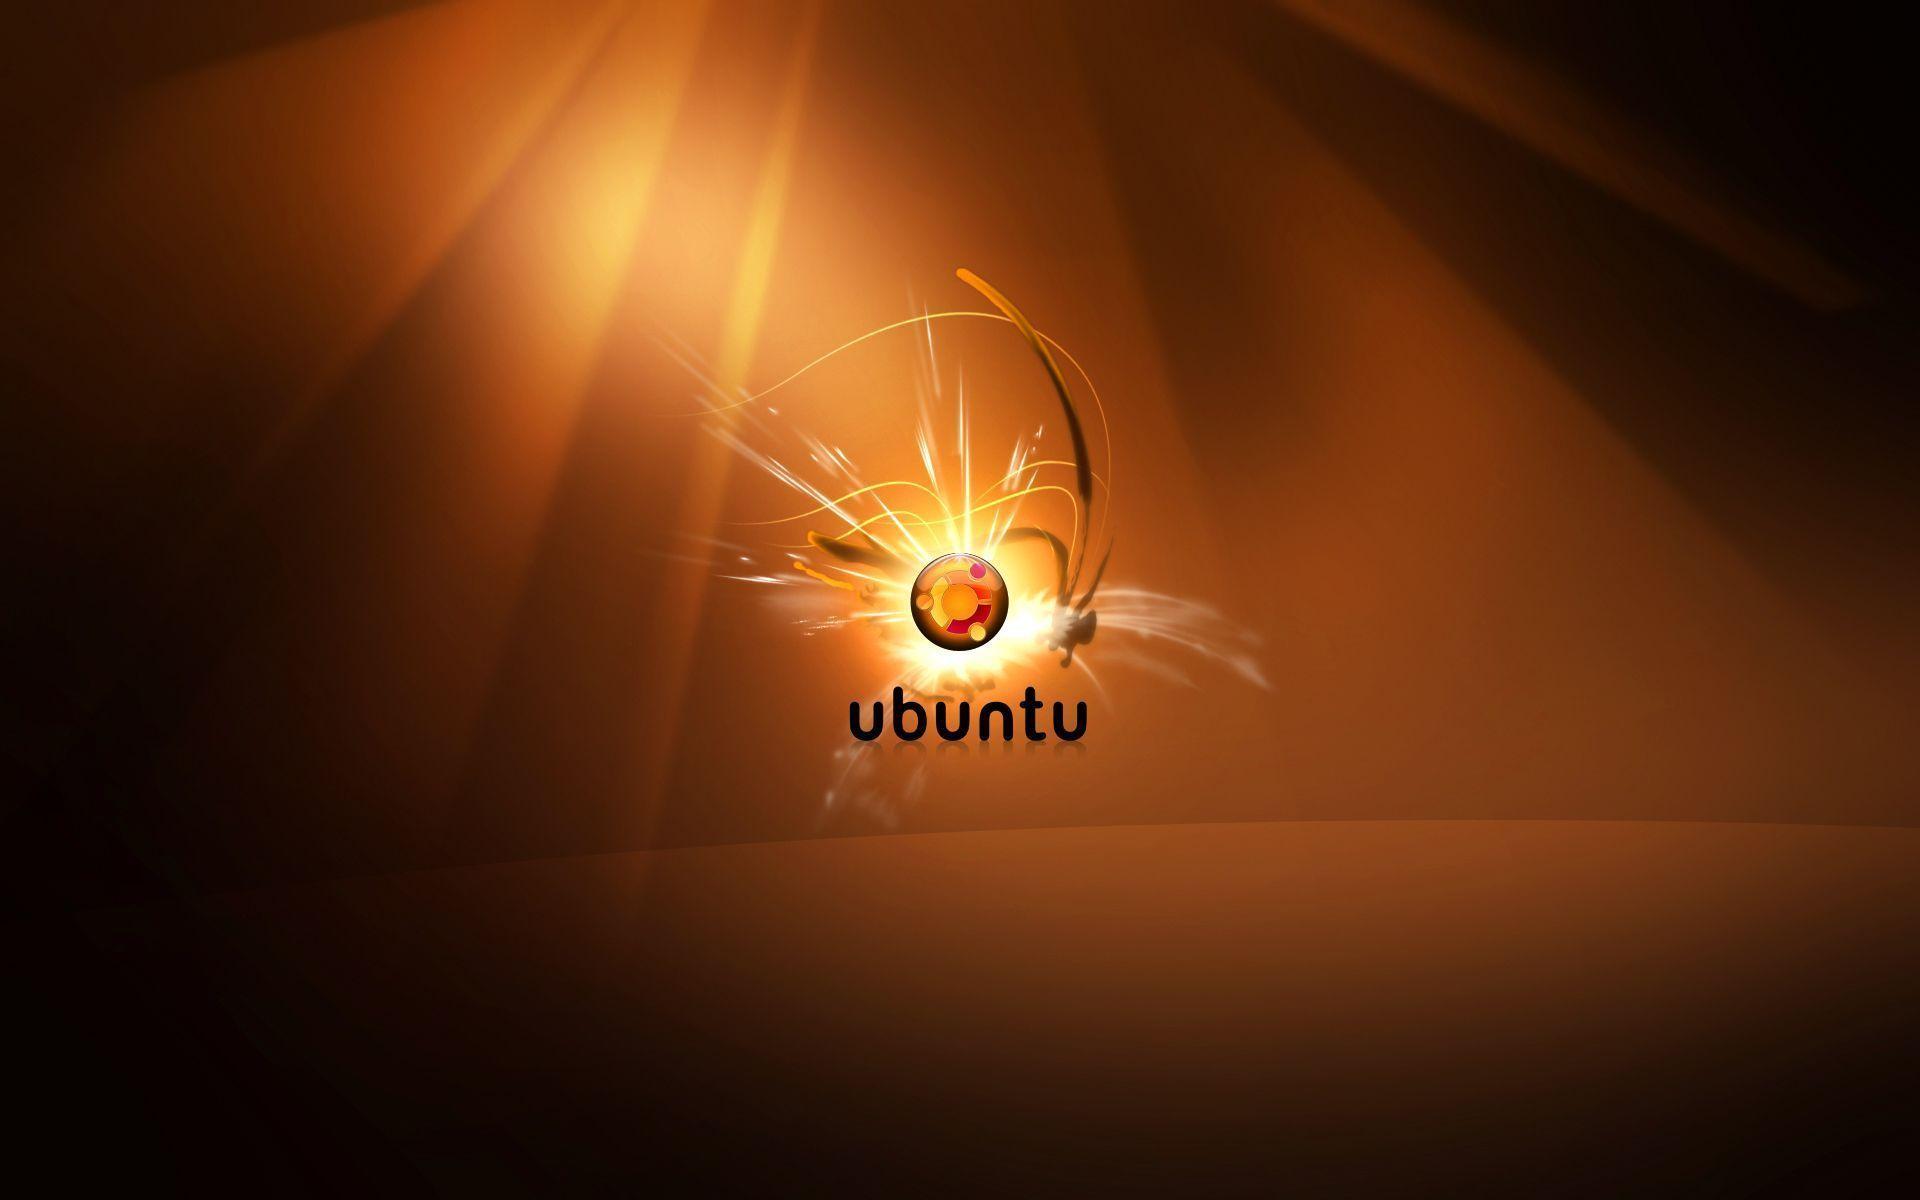 Widescreen HD Wallpaper for Ubuntu 1920×1200 set. Galery